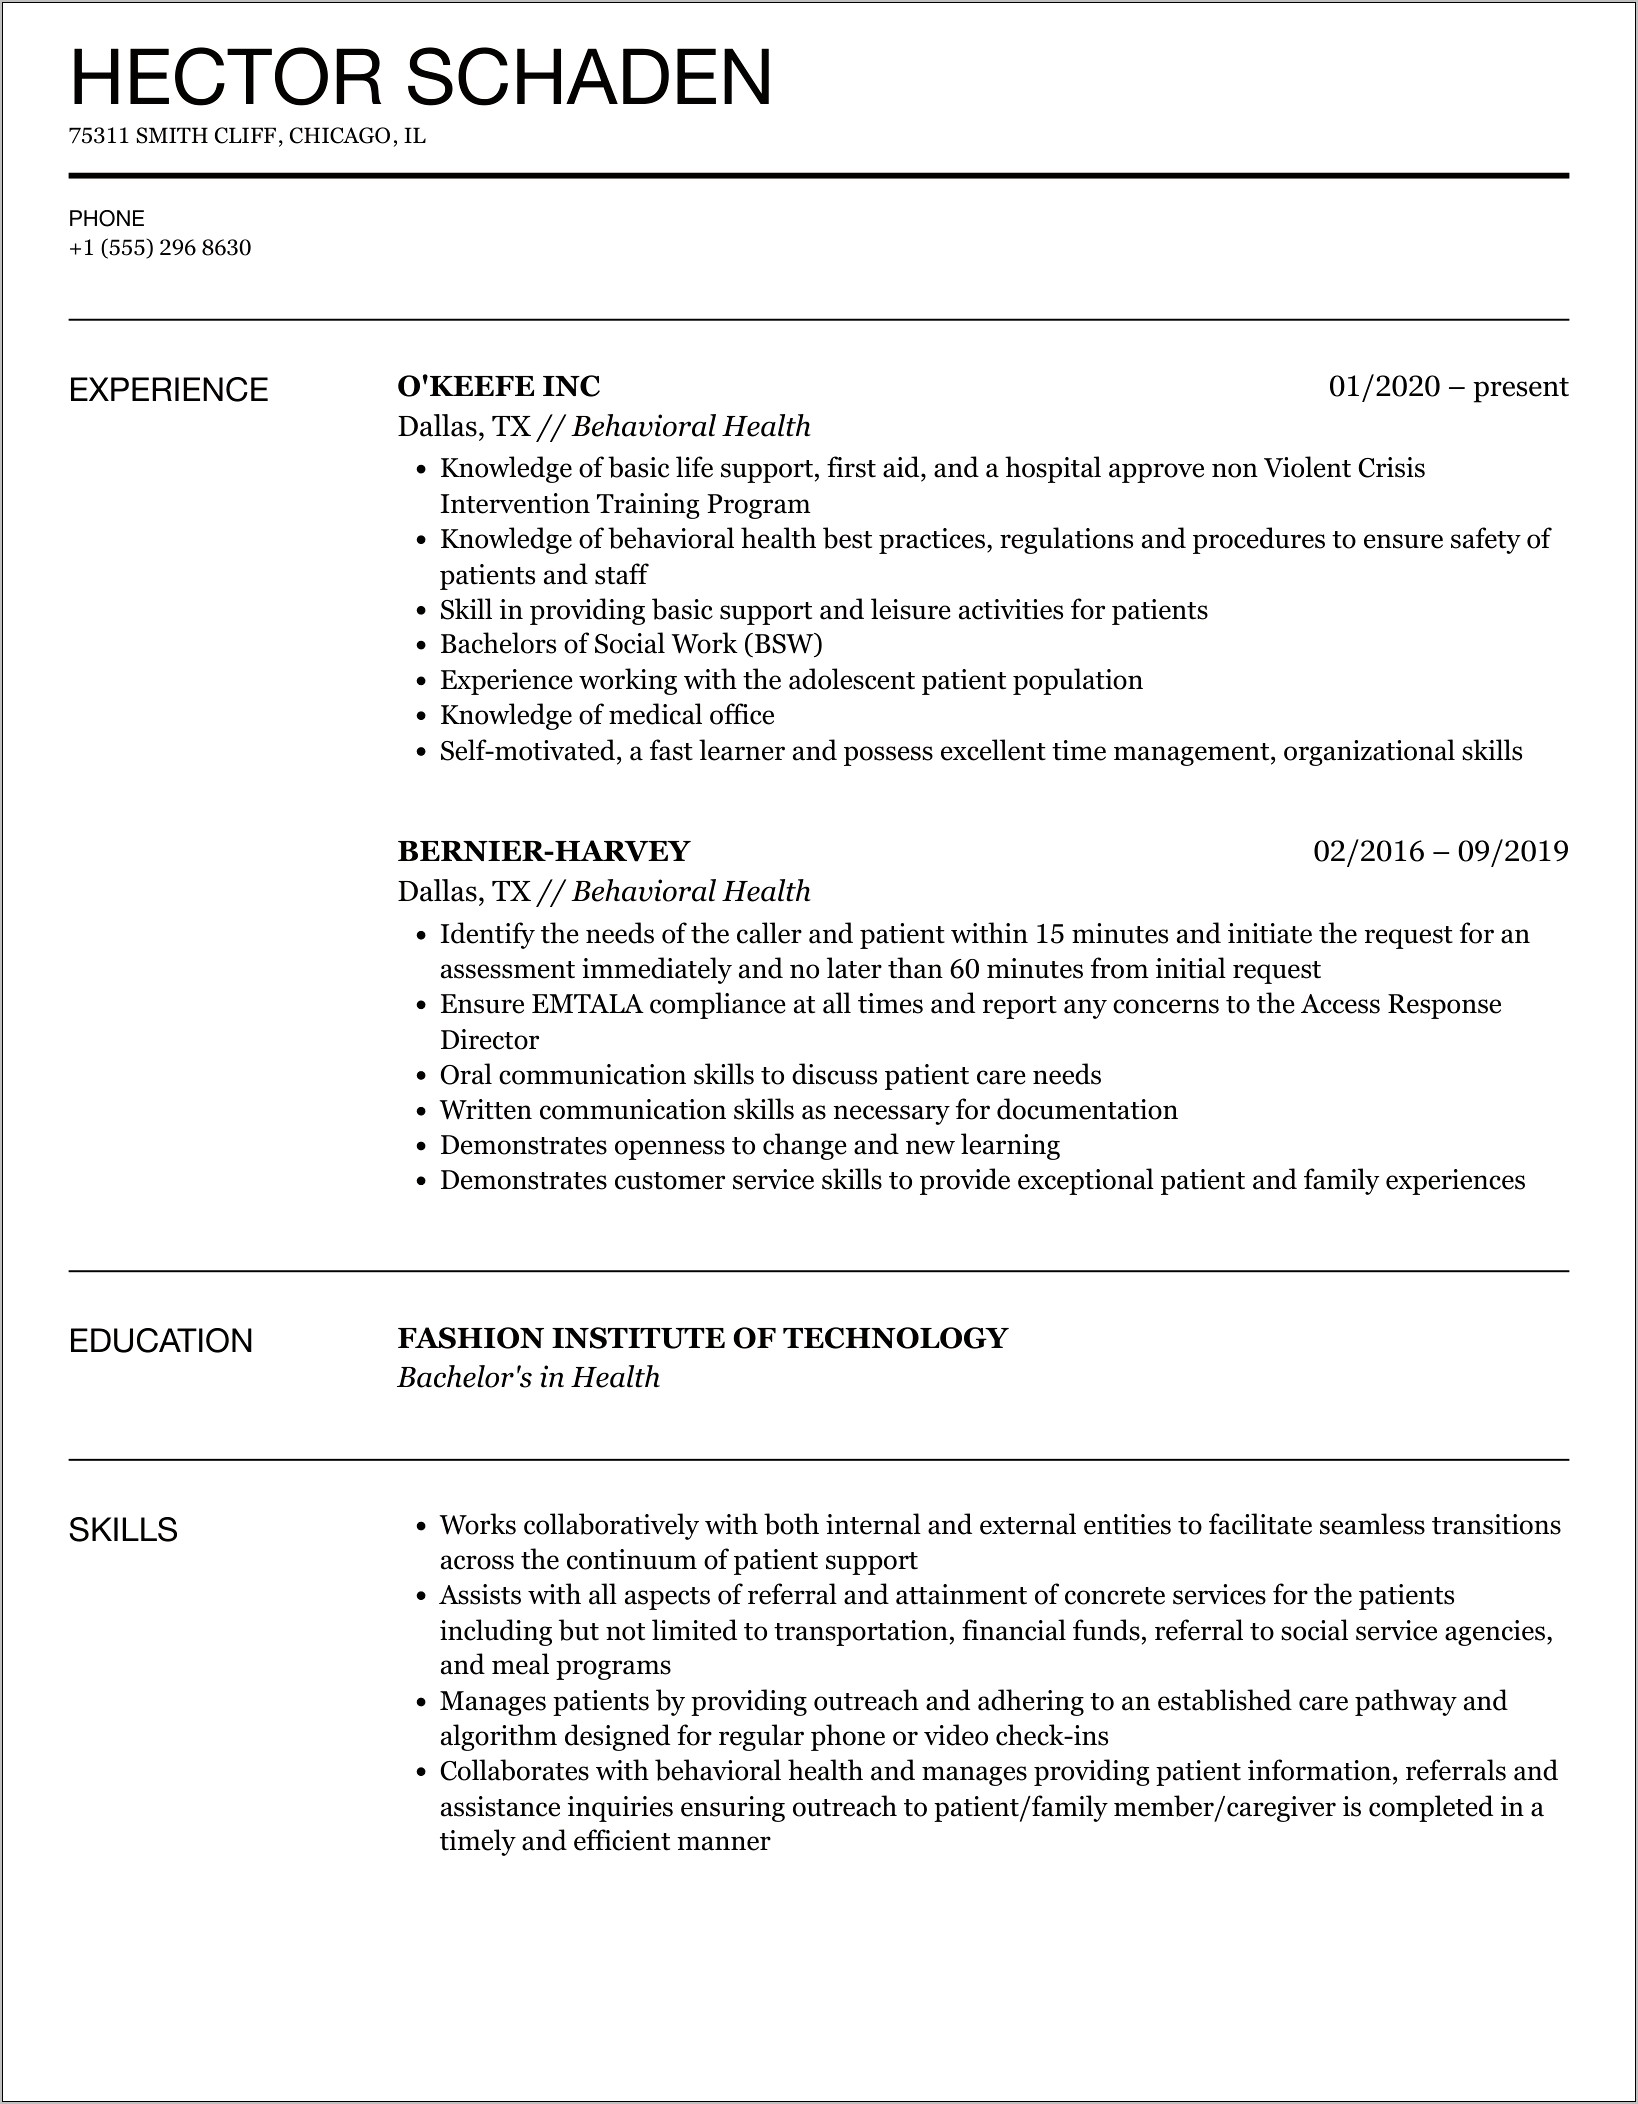 Resume Skills Mental Health Managemnet